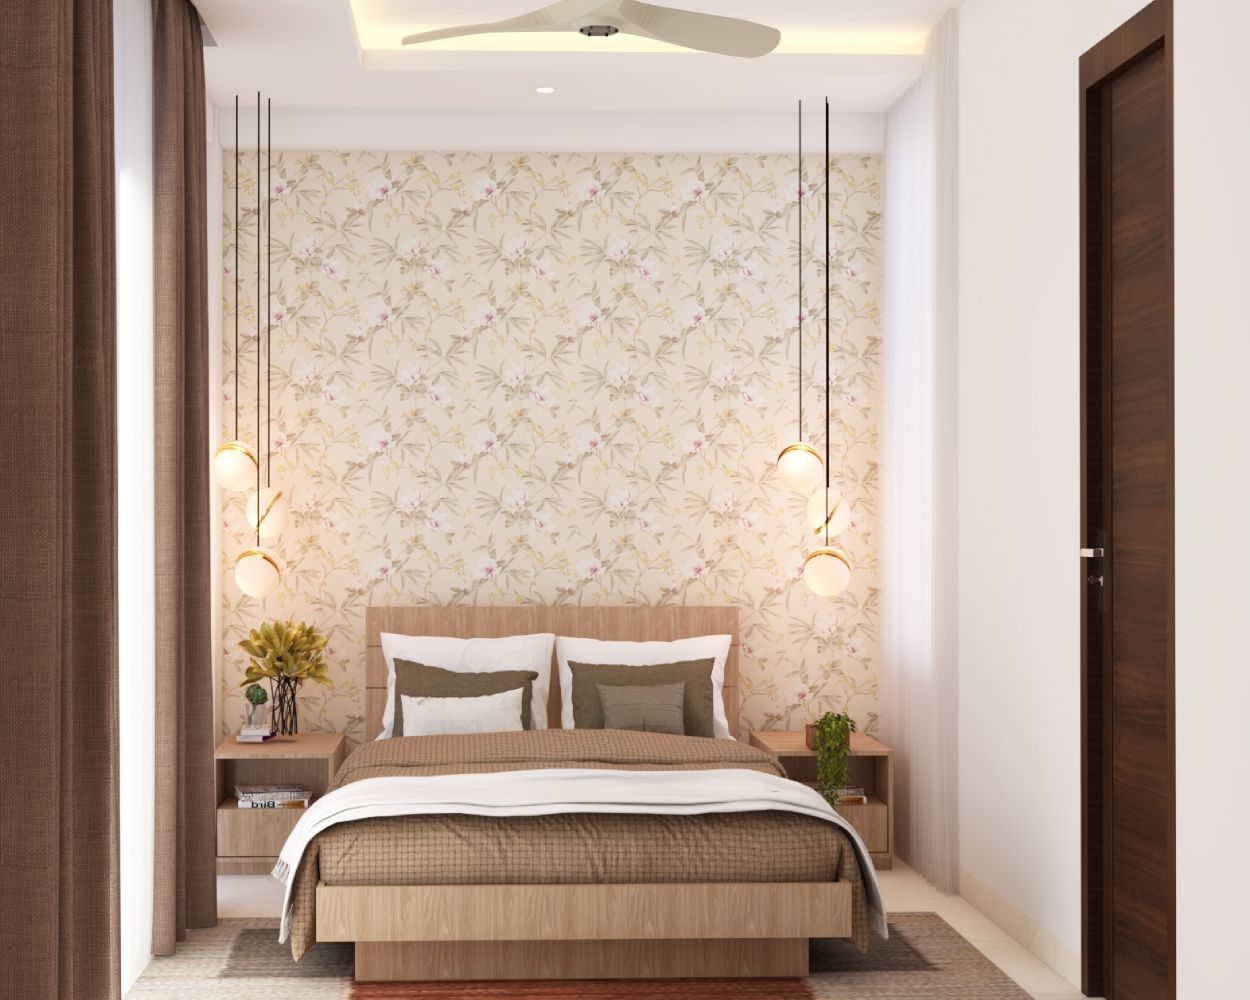 Modern Guest Room Design With Beige Floral Wallpaper